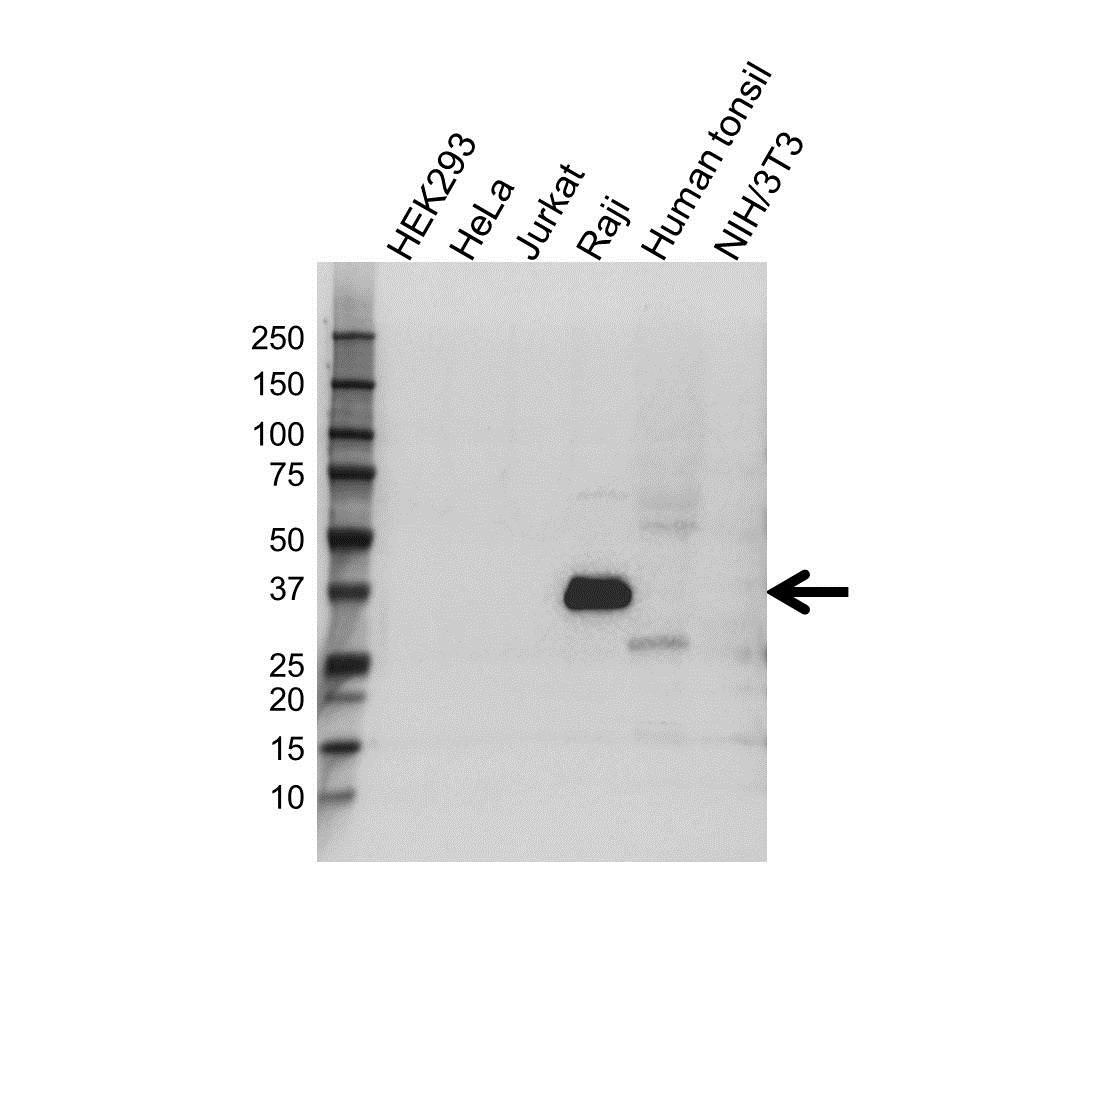 CD74 Antibody (PrecisionAb Antibody)|OTI1H3|VMA00424